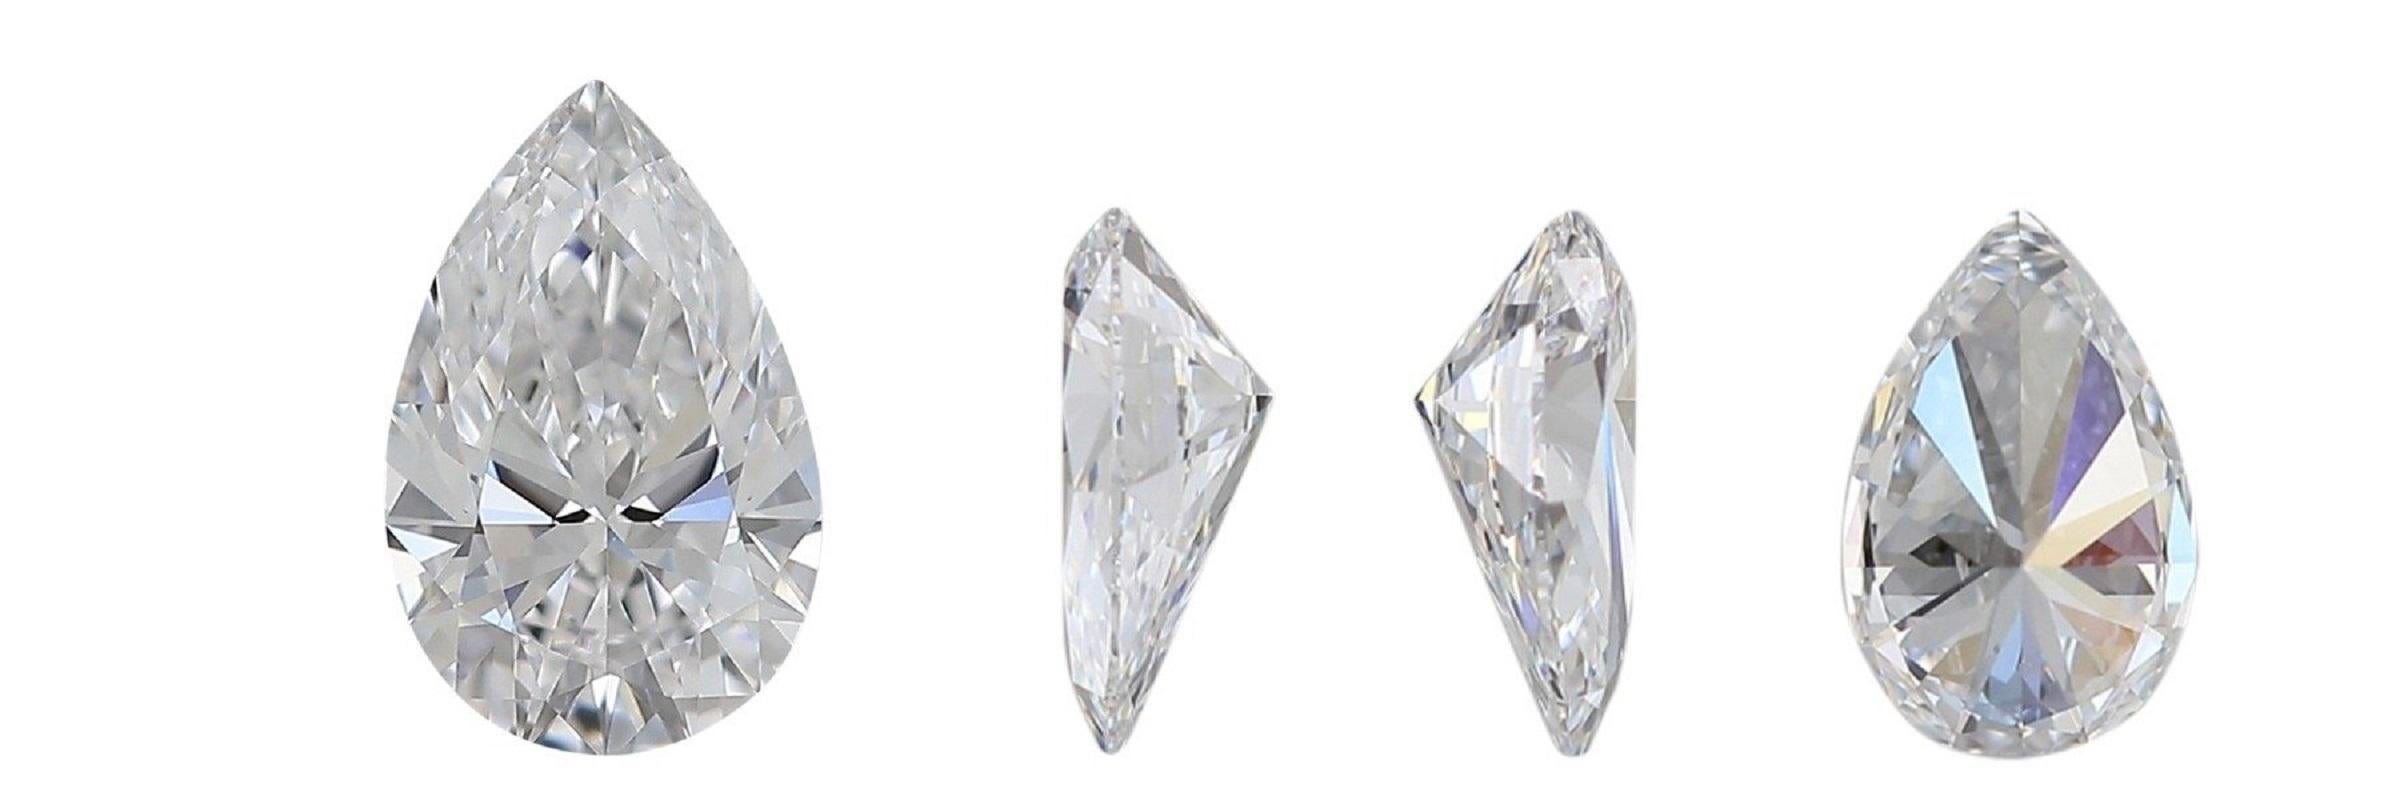 Pear Cut 1 pc Natural Diamond - 1.53 ct - Pear - D (colourless) - VS1- IGI Certificate For Sale